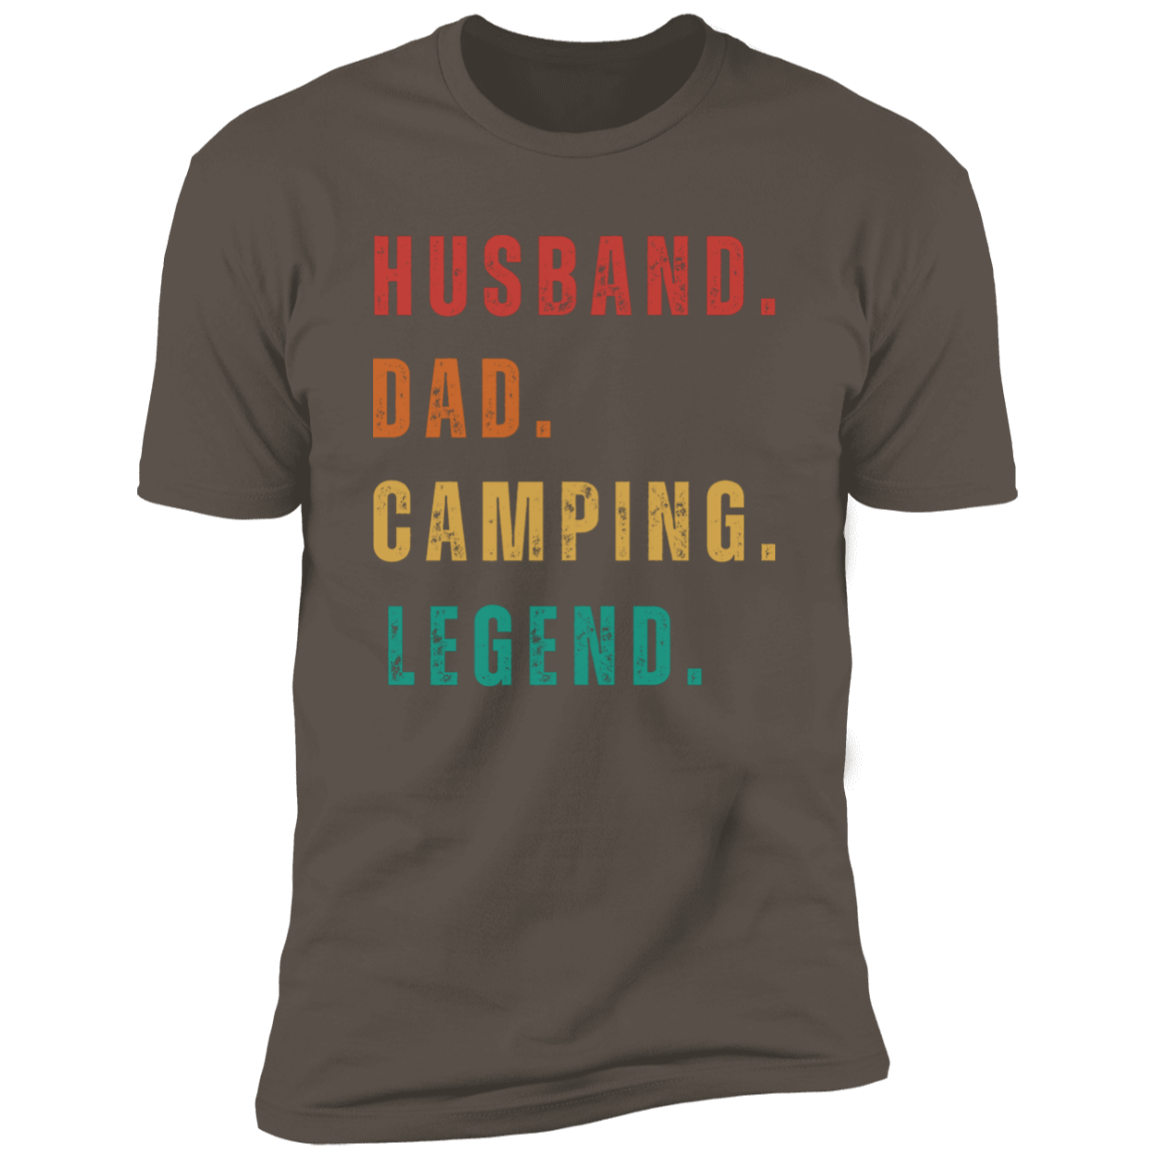 Husband. Dad. Camping. Legend. T-shirt